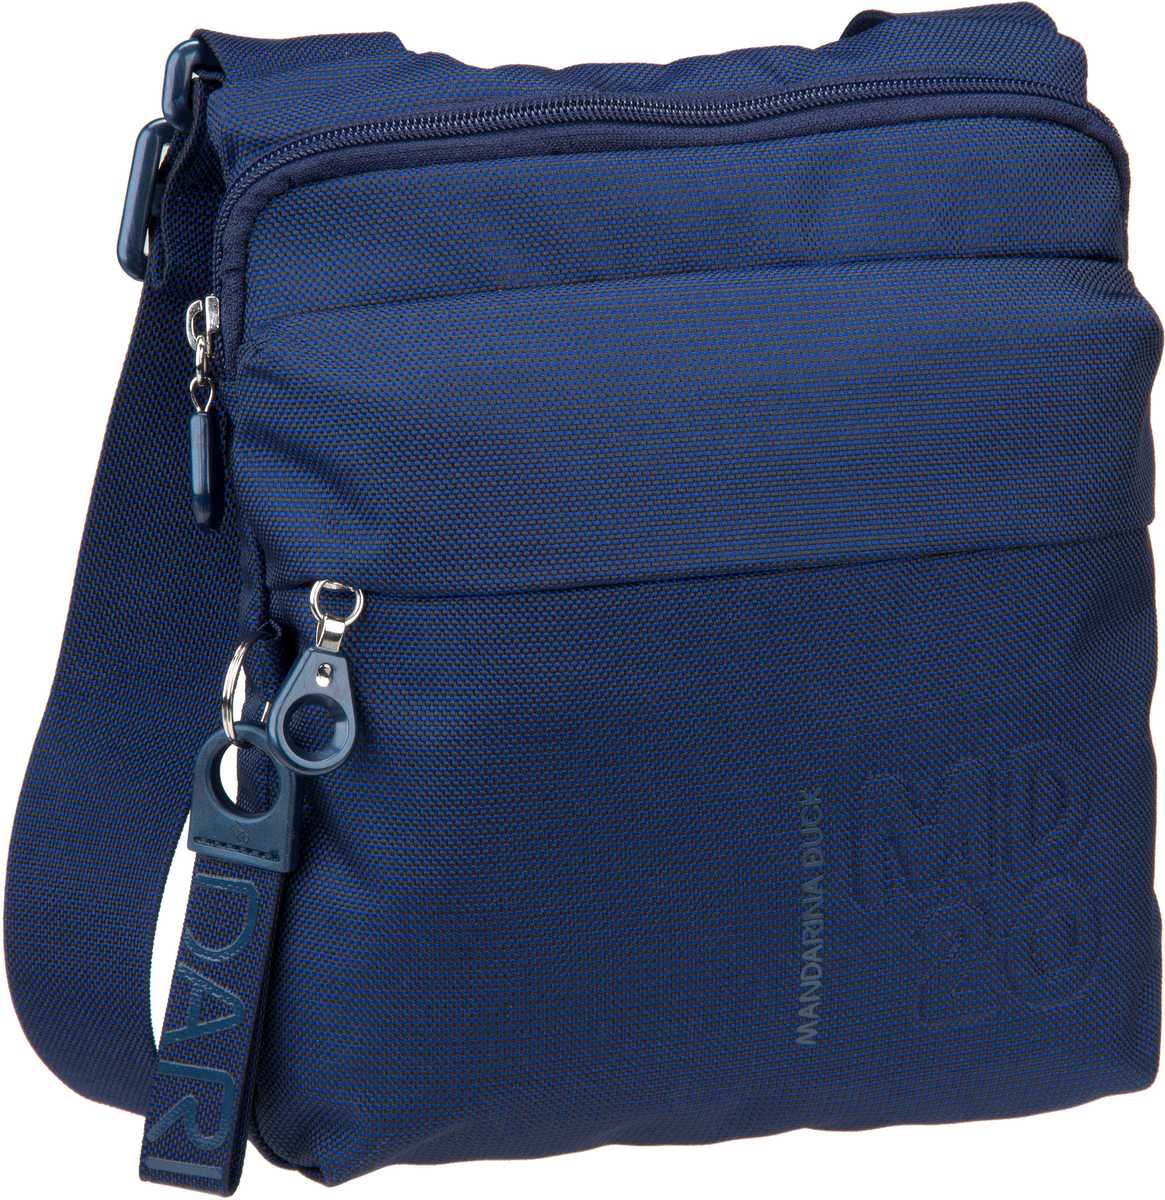 Mandarina Duck MD20 Small Crossover Bag QMT04 - Dress Blue